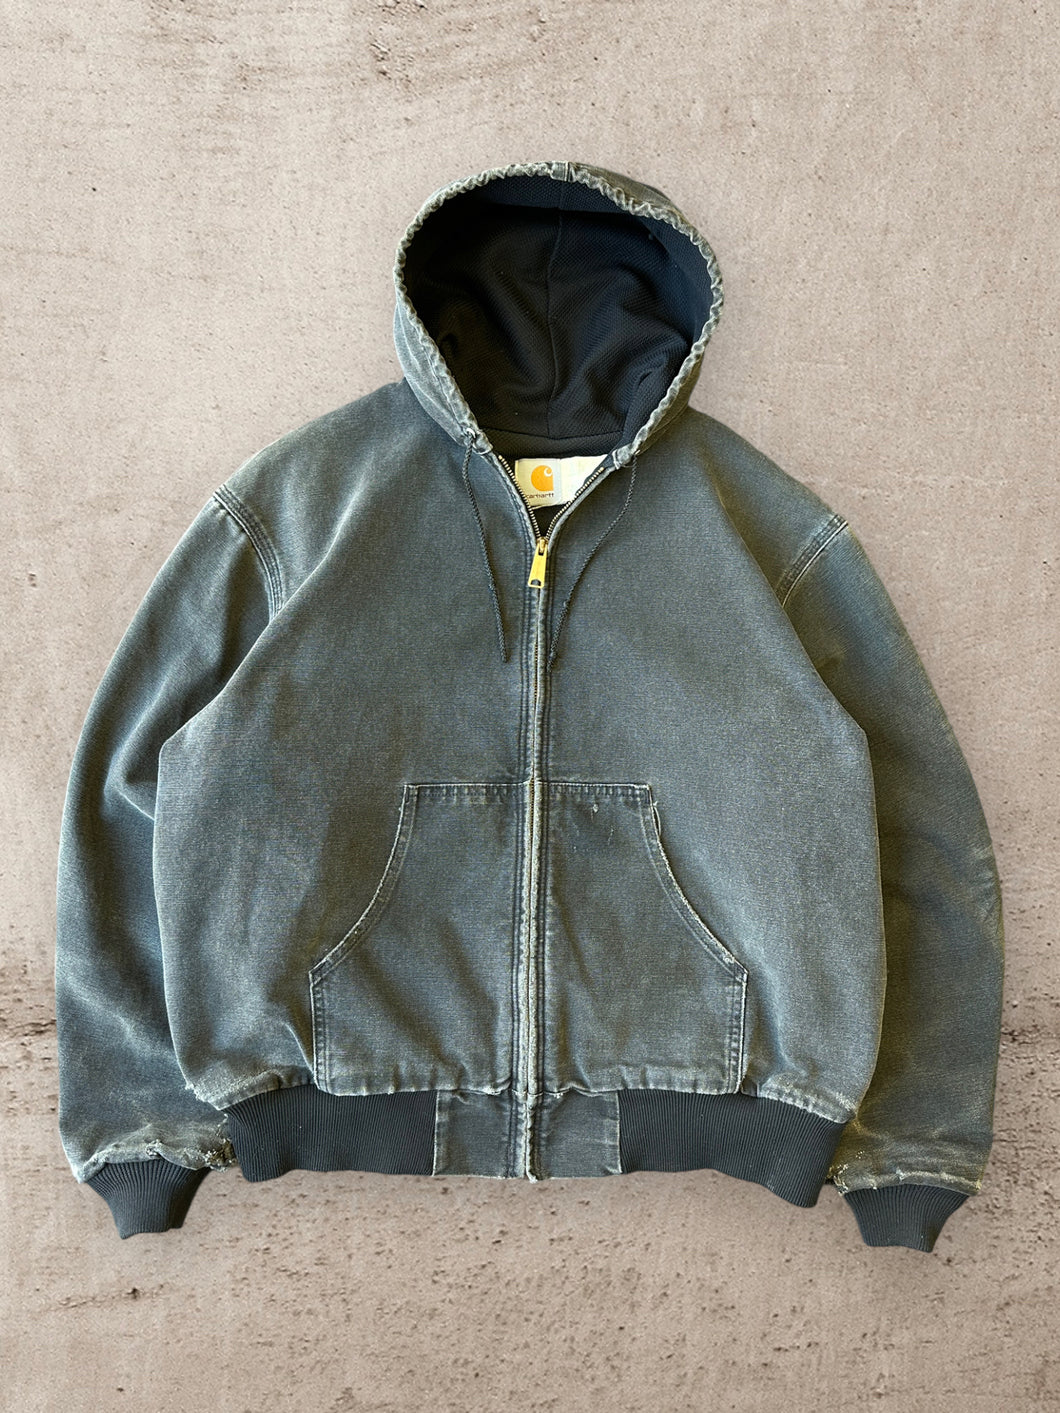 90s Carhartt Black Hooded Jacket - XL